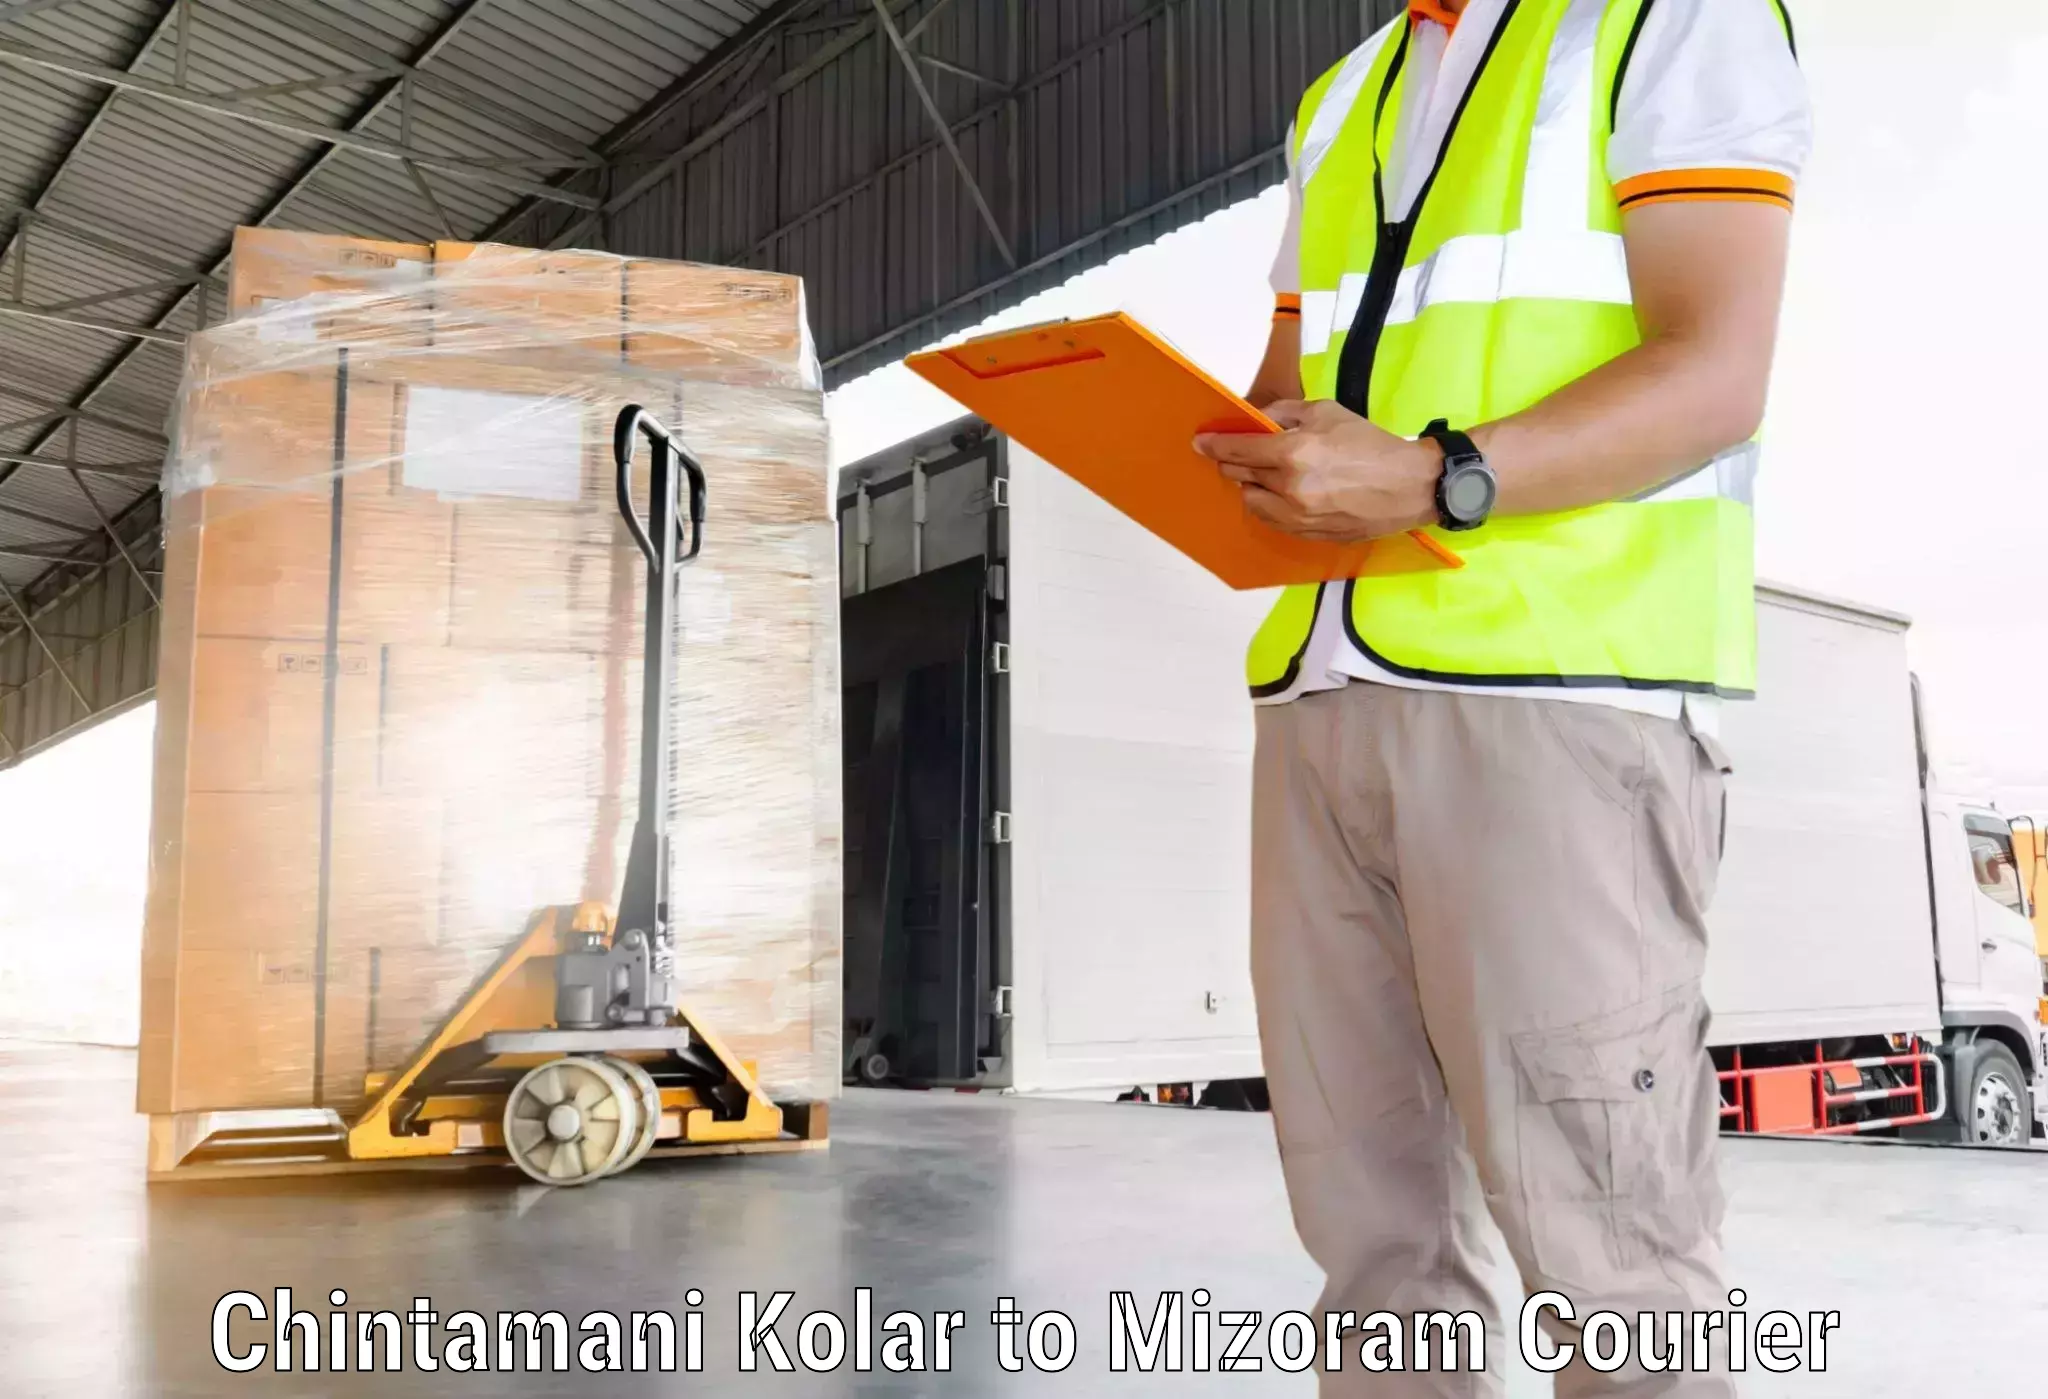 Specialized shipment handling in Chintamani Kolar to Siaha